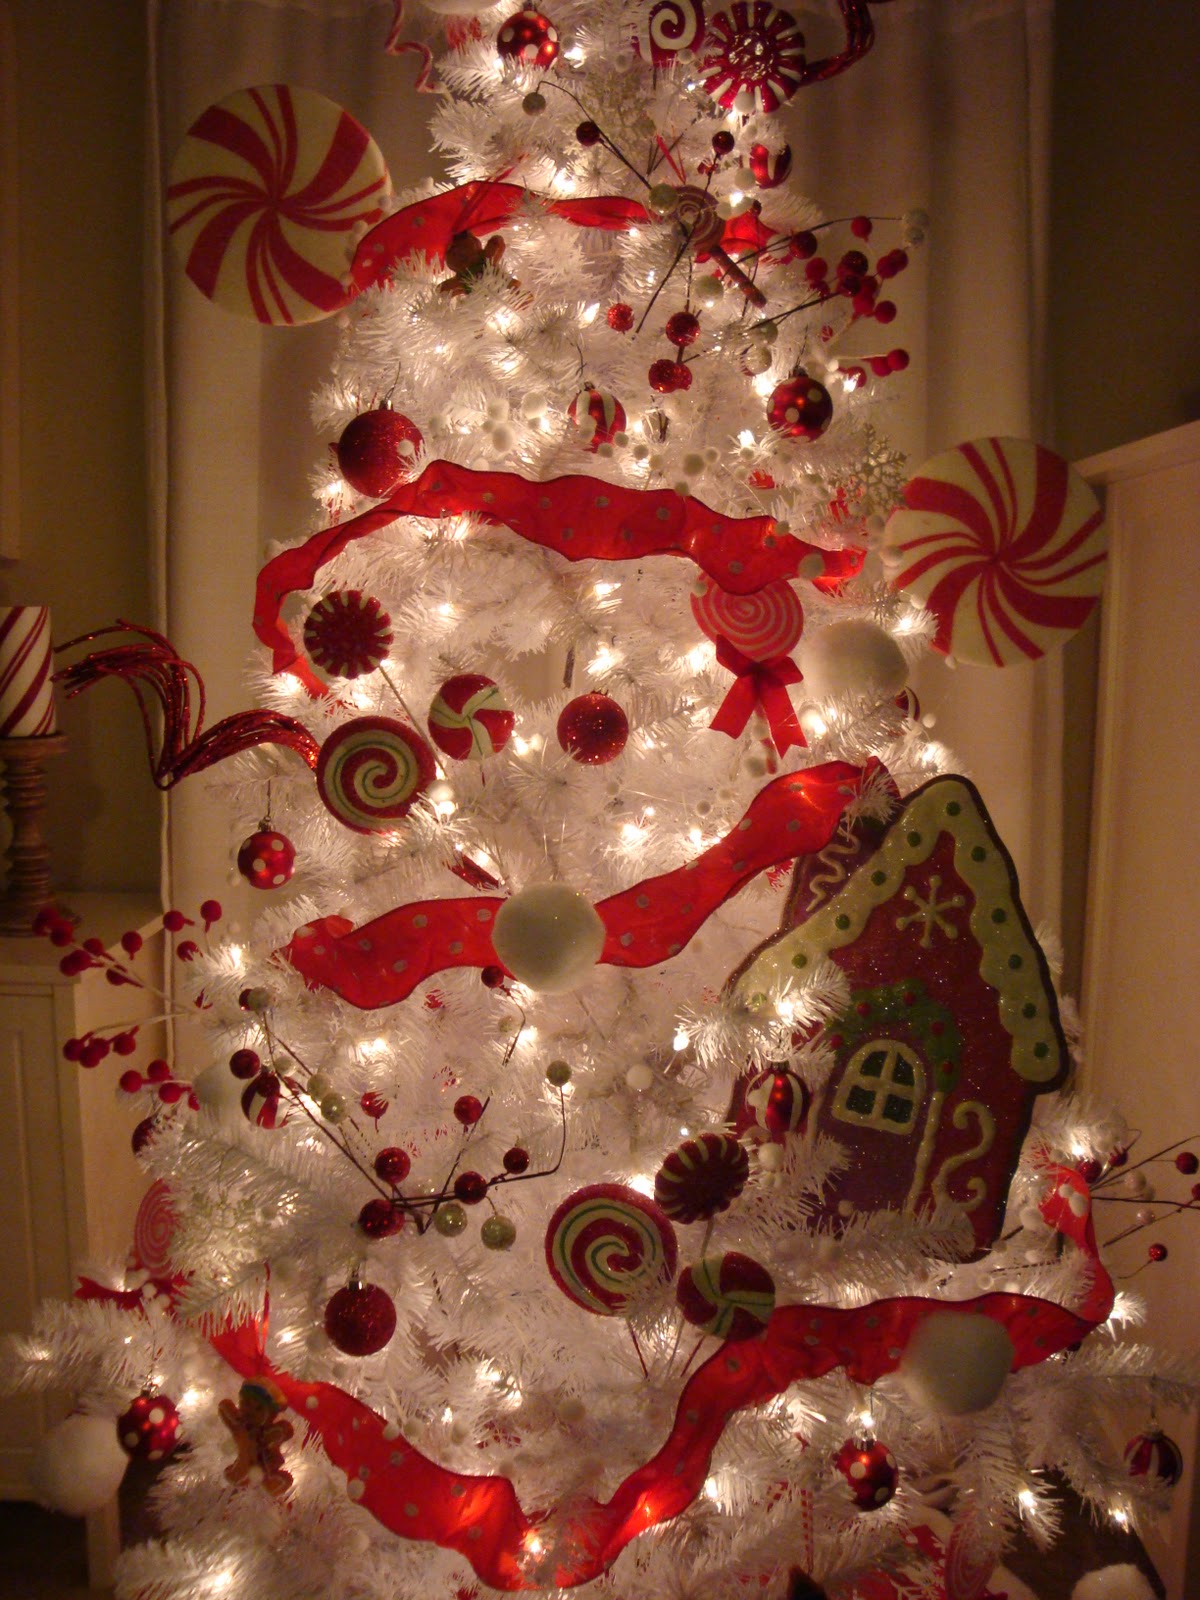 70 Beautiful Christmas Tree Decoration Ideas – The WoW Style